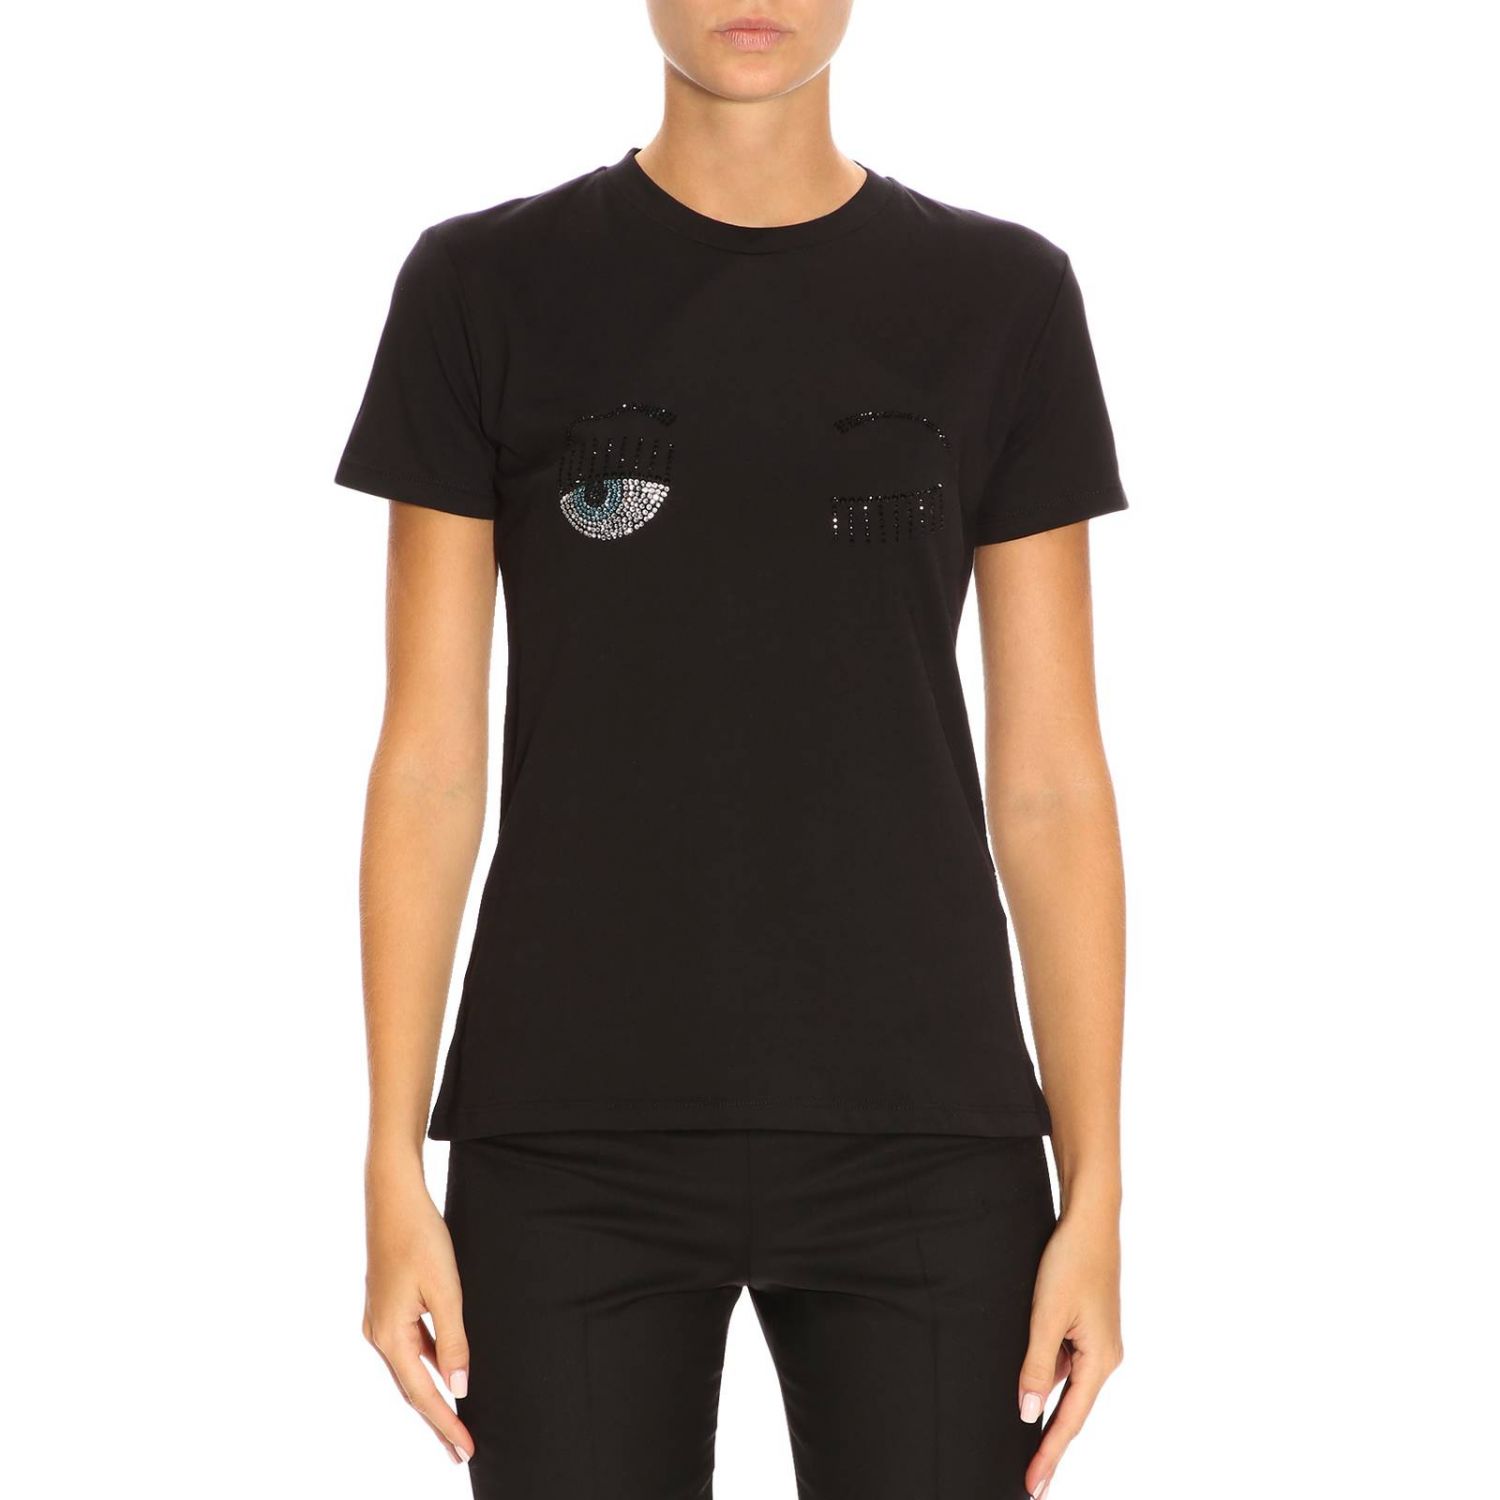 CHIARA FERRAGNI: T-shirt women | T-Shirt Chiara Ferragni Women Black ...